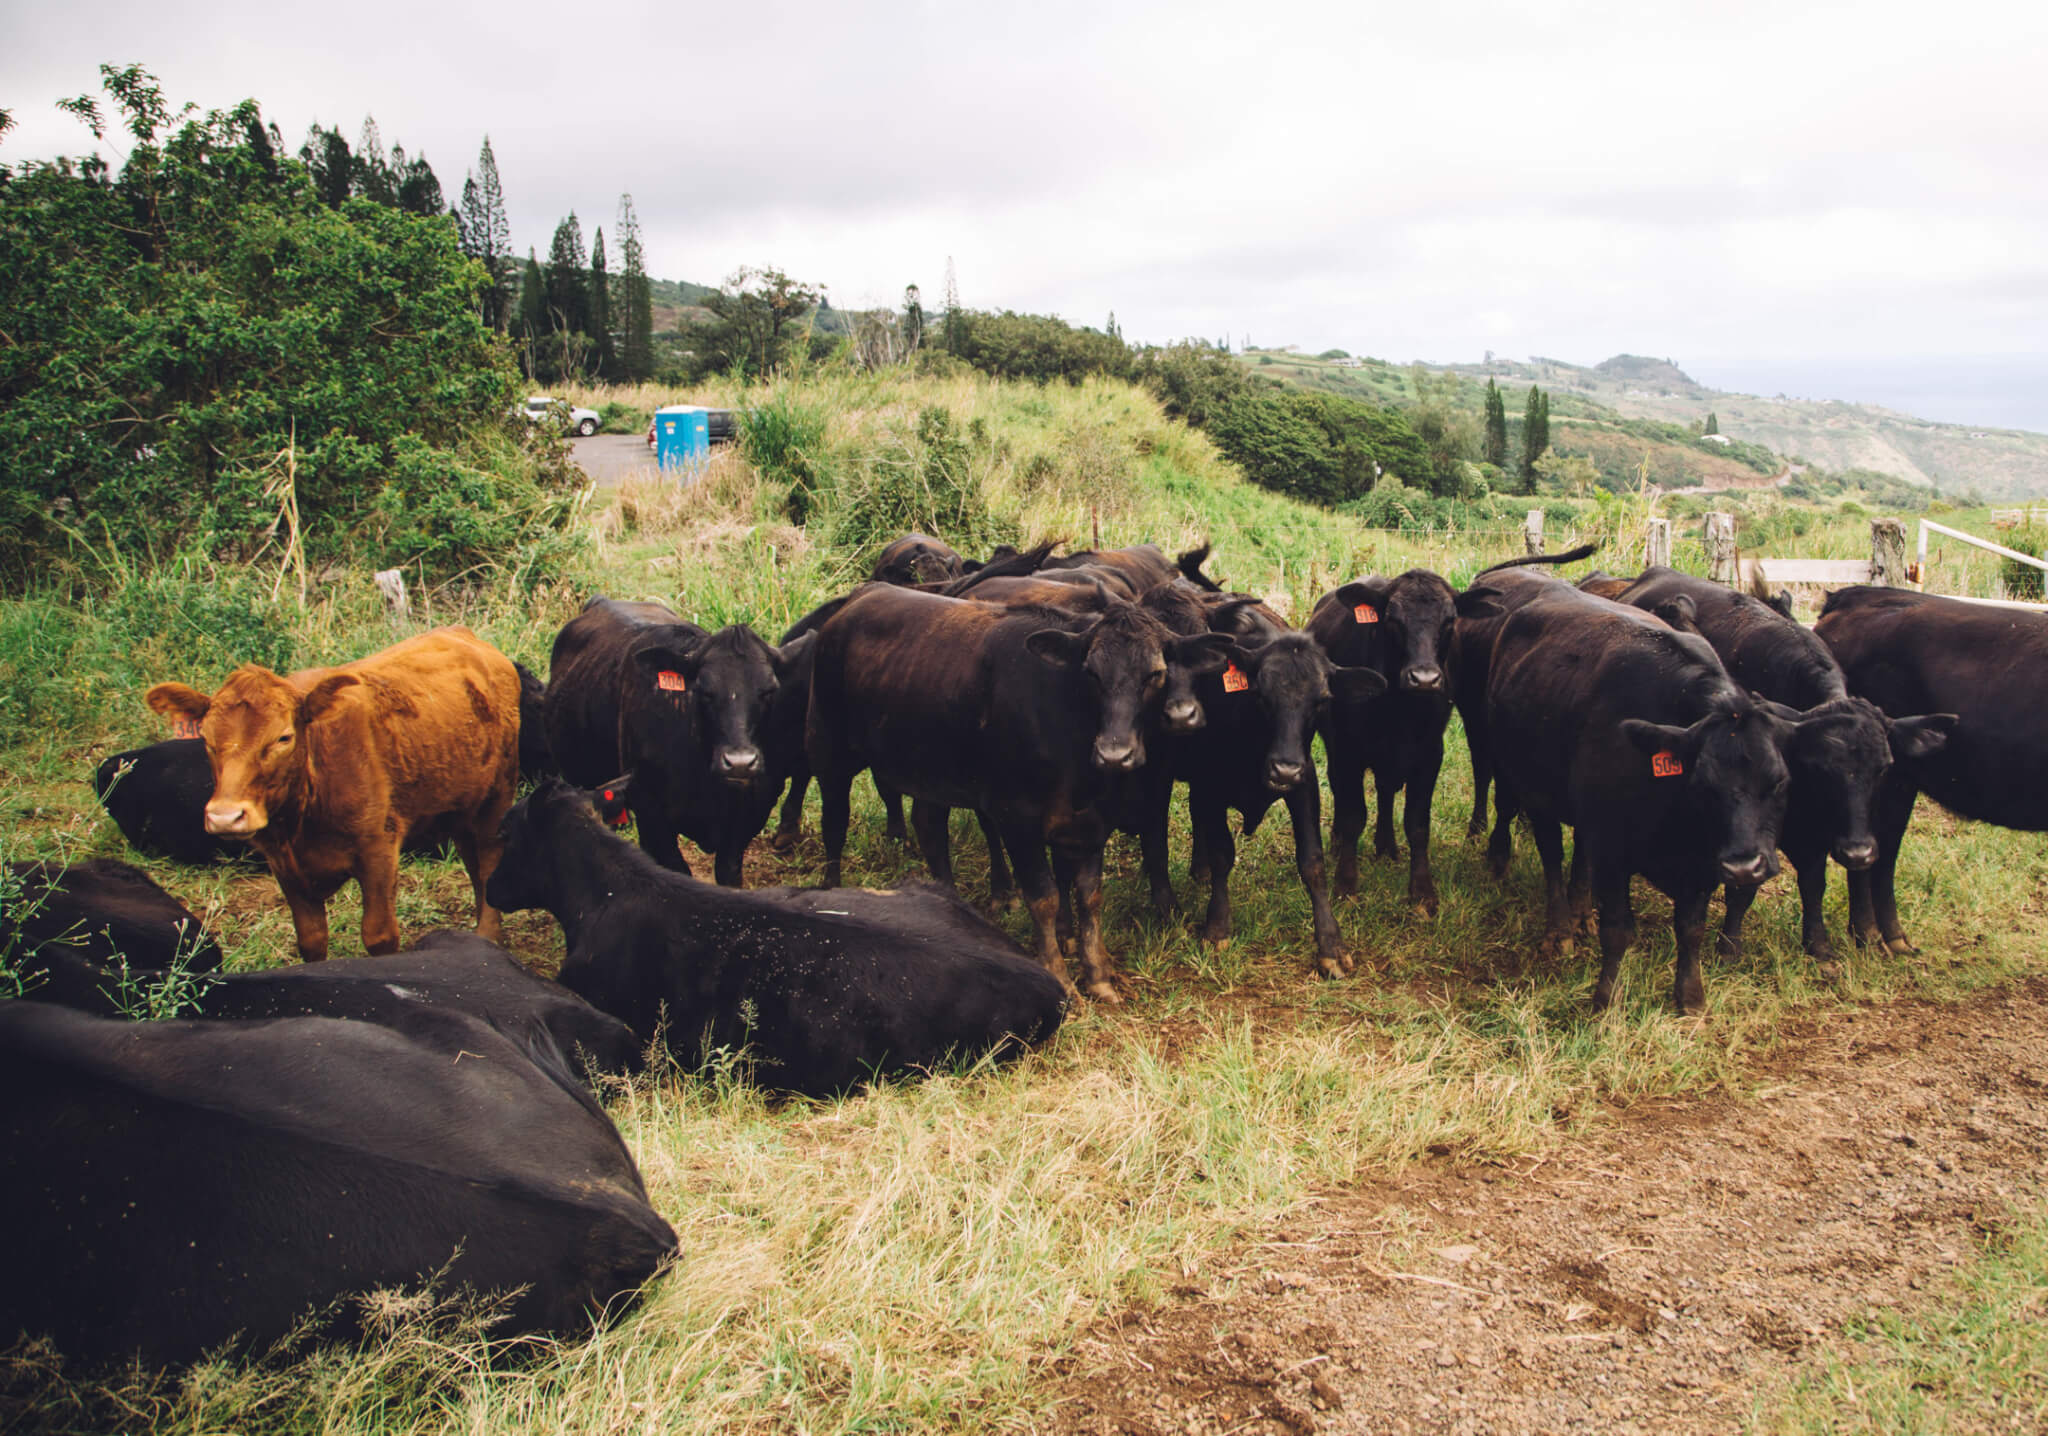 So many cows at the entrance of Waihe'e Ridge Trail